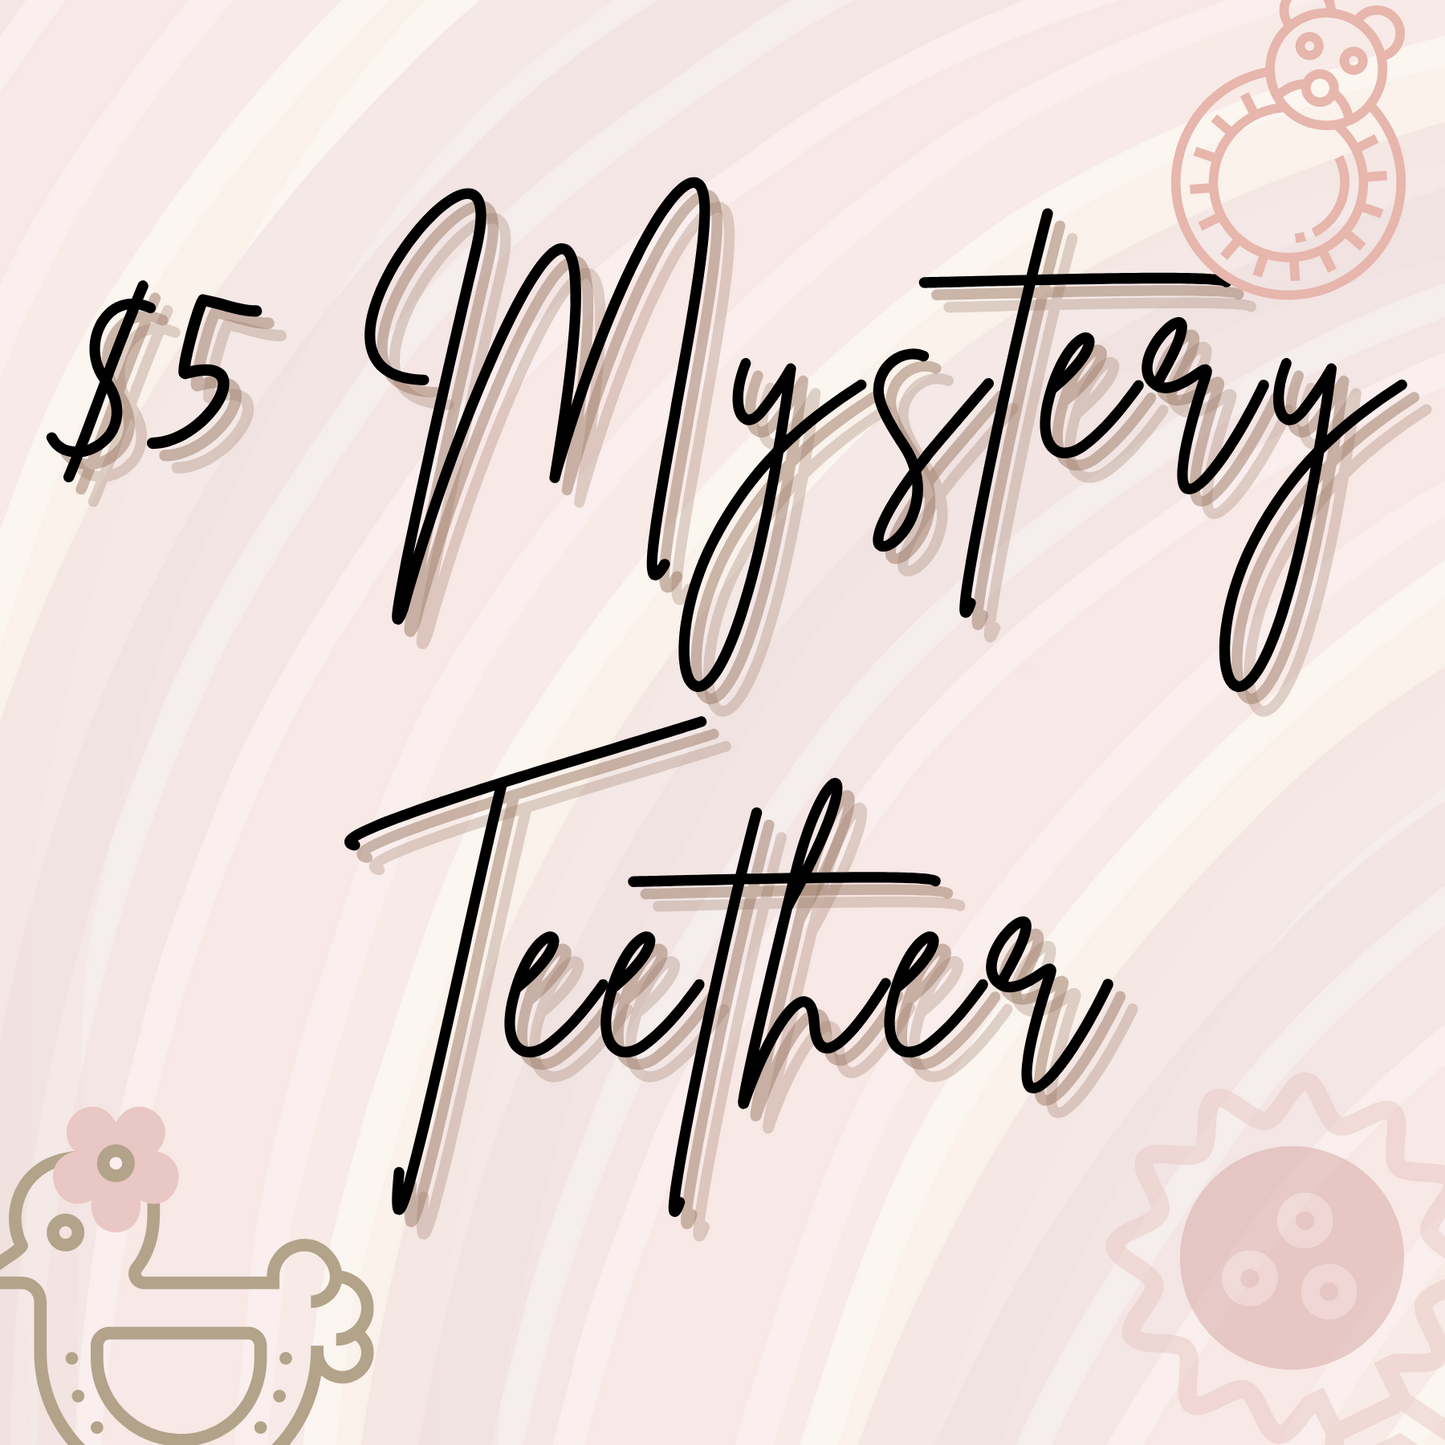 $5 Mystery Teether